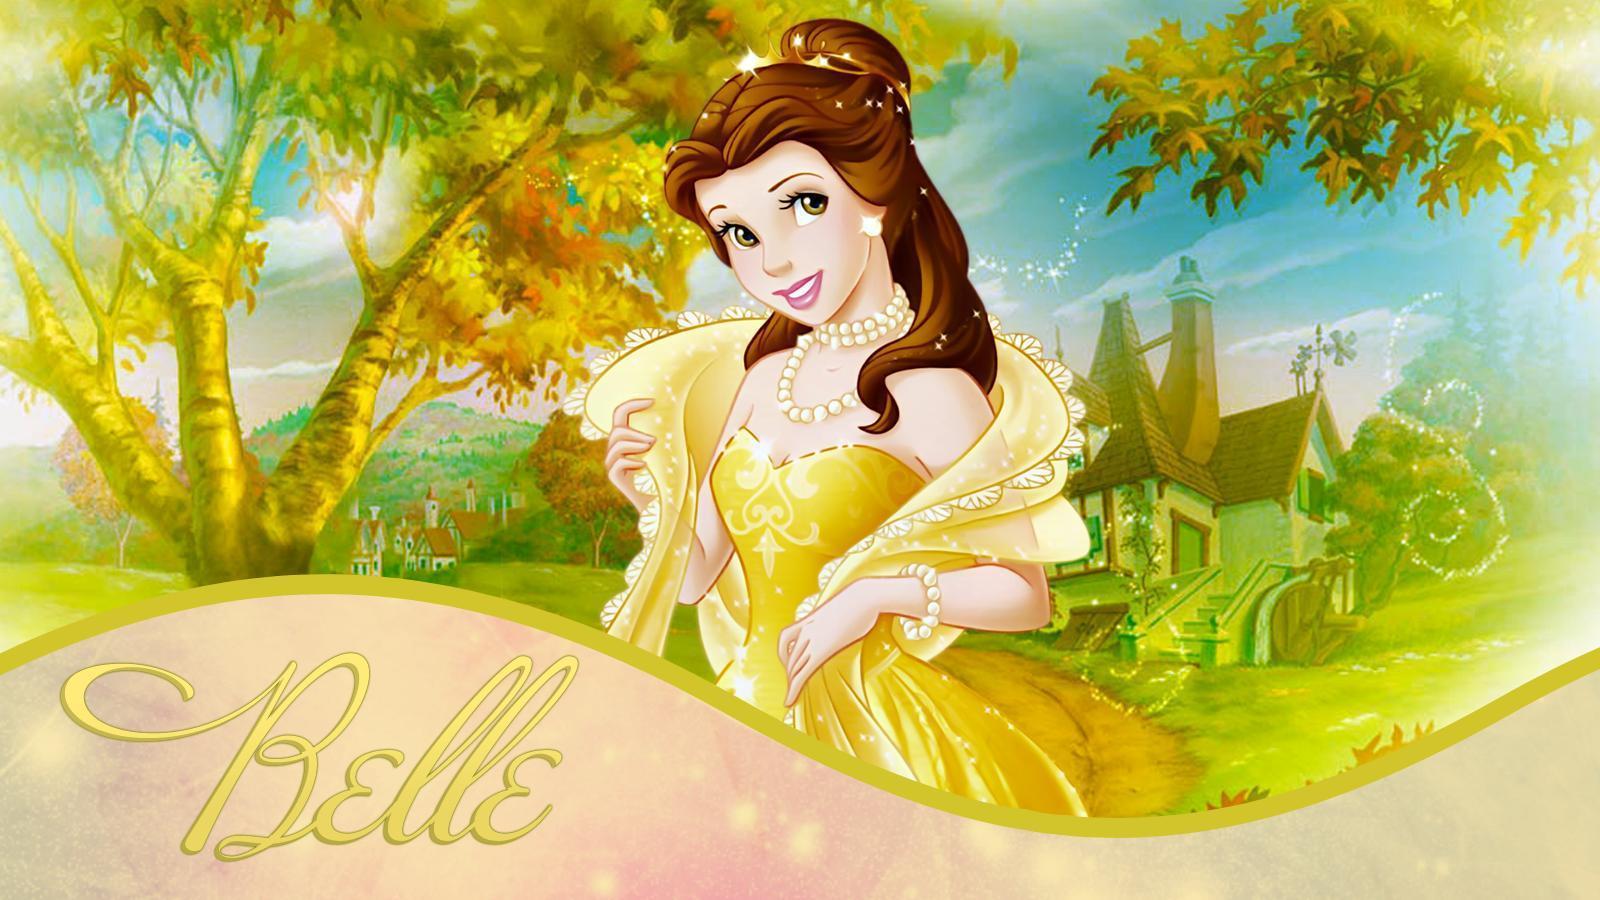 Wallpaper For > Disney Princess Belle Wallpaper